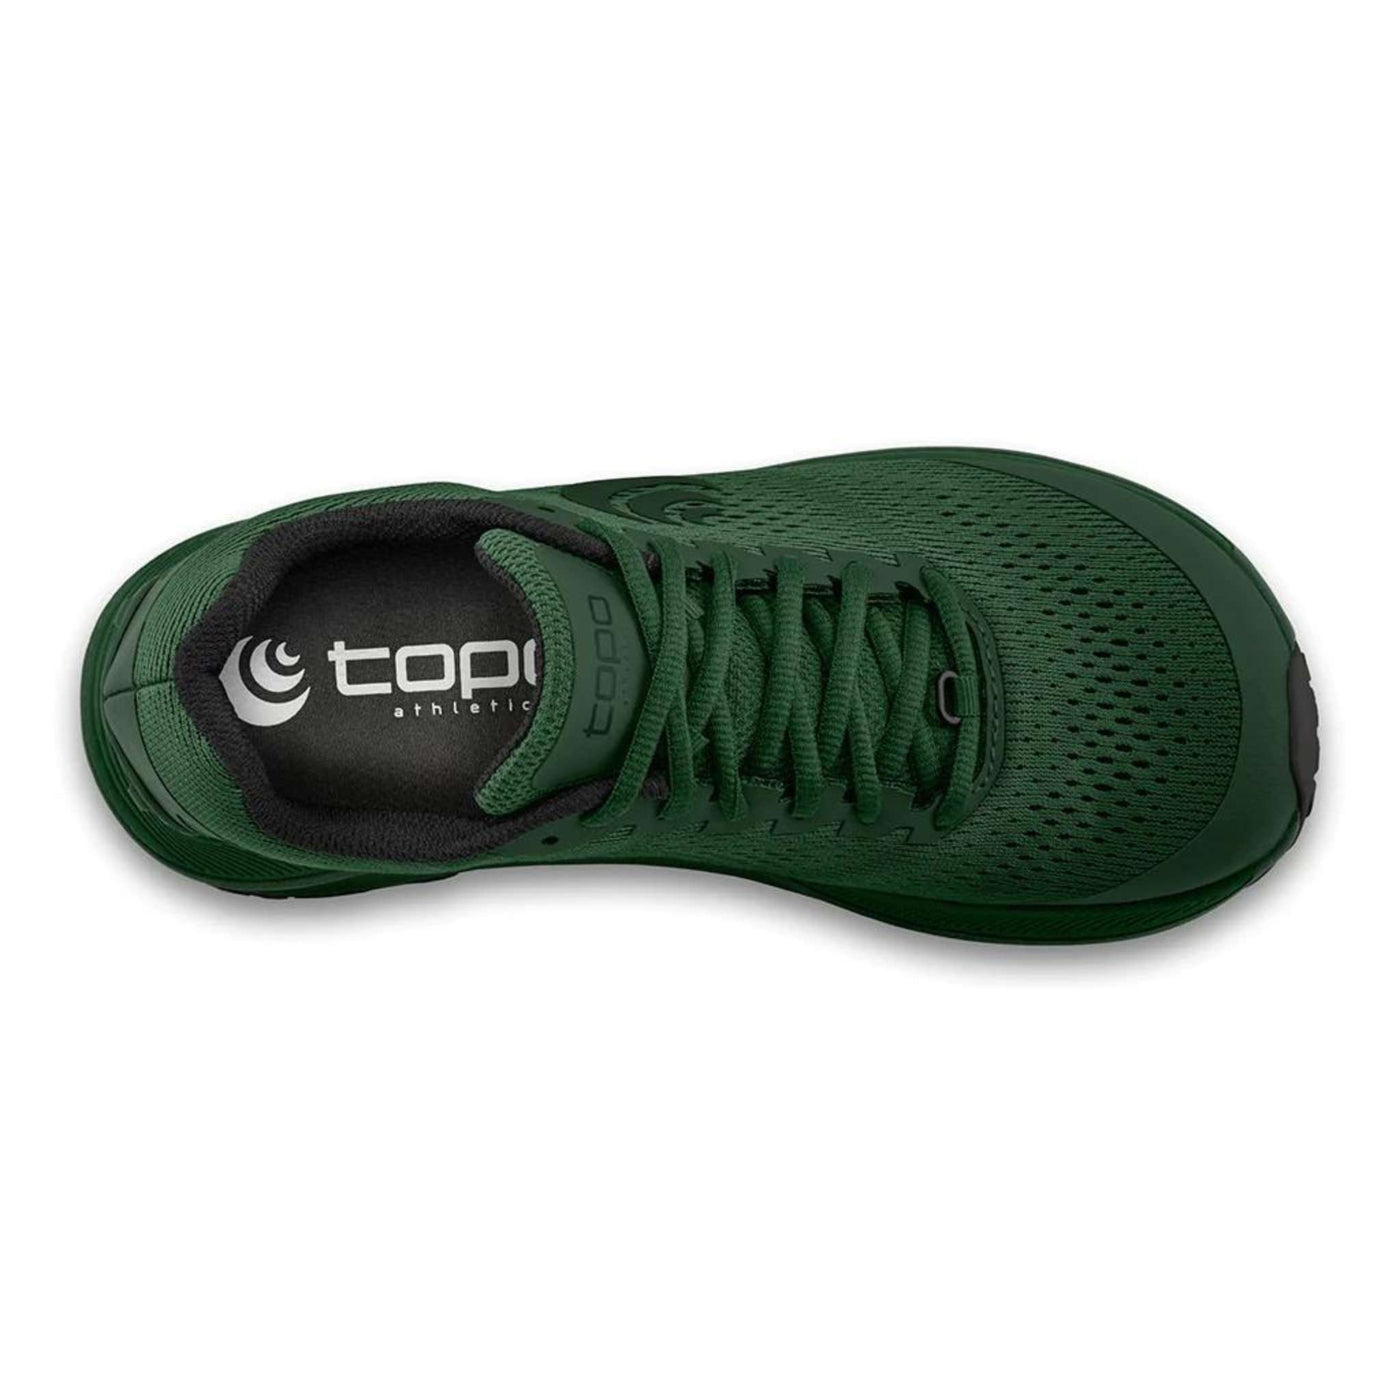 Topo Ultraventure 3 - Mens | Mens Trail Running Shoes NZ | Further Faster Christchurch NZ #forest-green